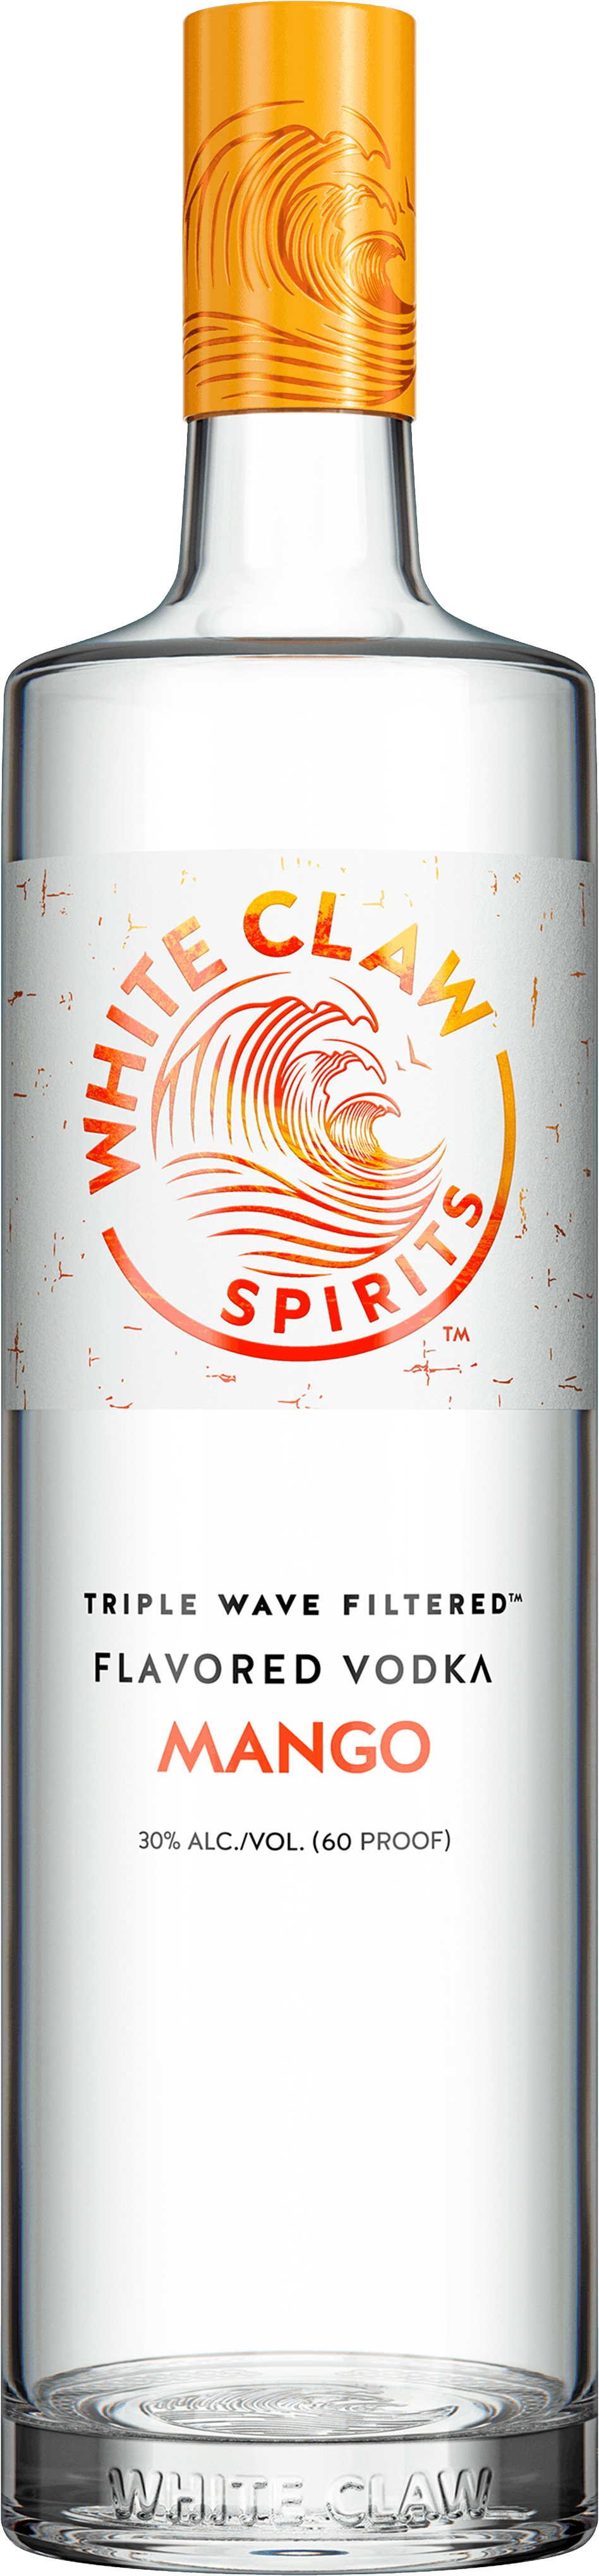 White Claw™ Flavored Vodka Mango. La botella está sobre la imagen de una ola que rompe.		